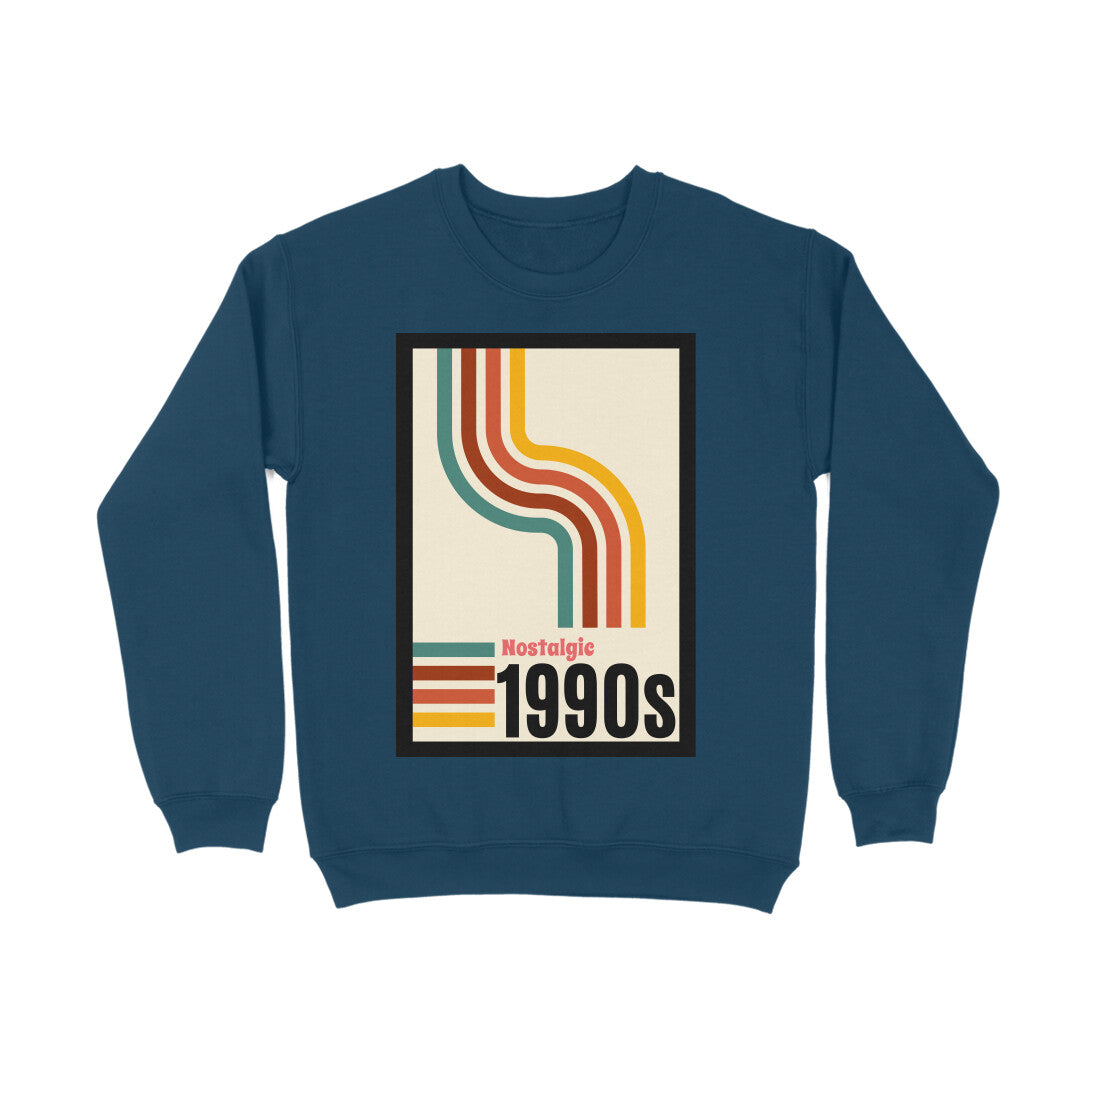 Bilkool Nostolgic 1990s Cotton Sweatshirt